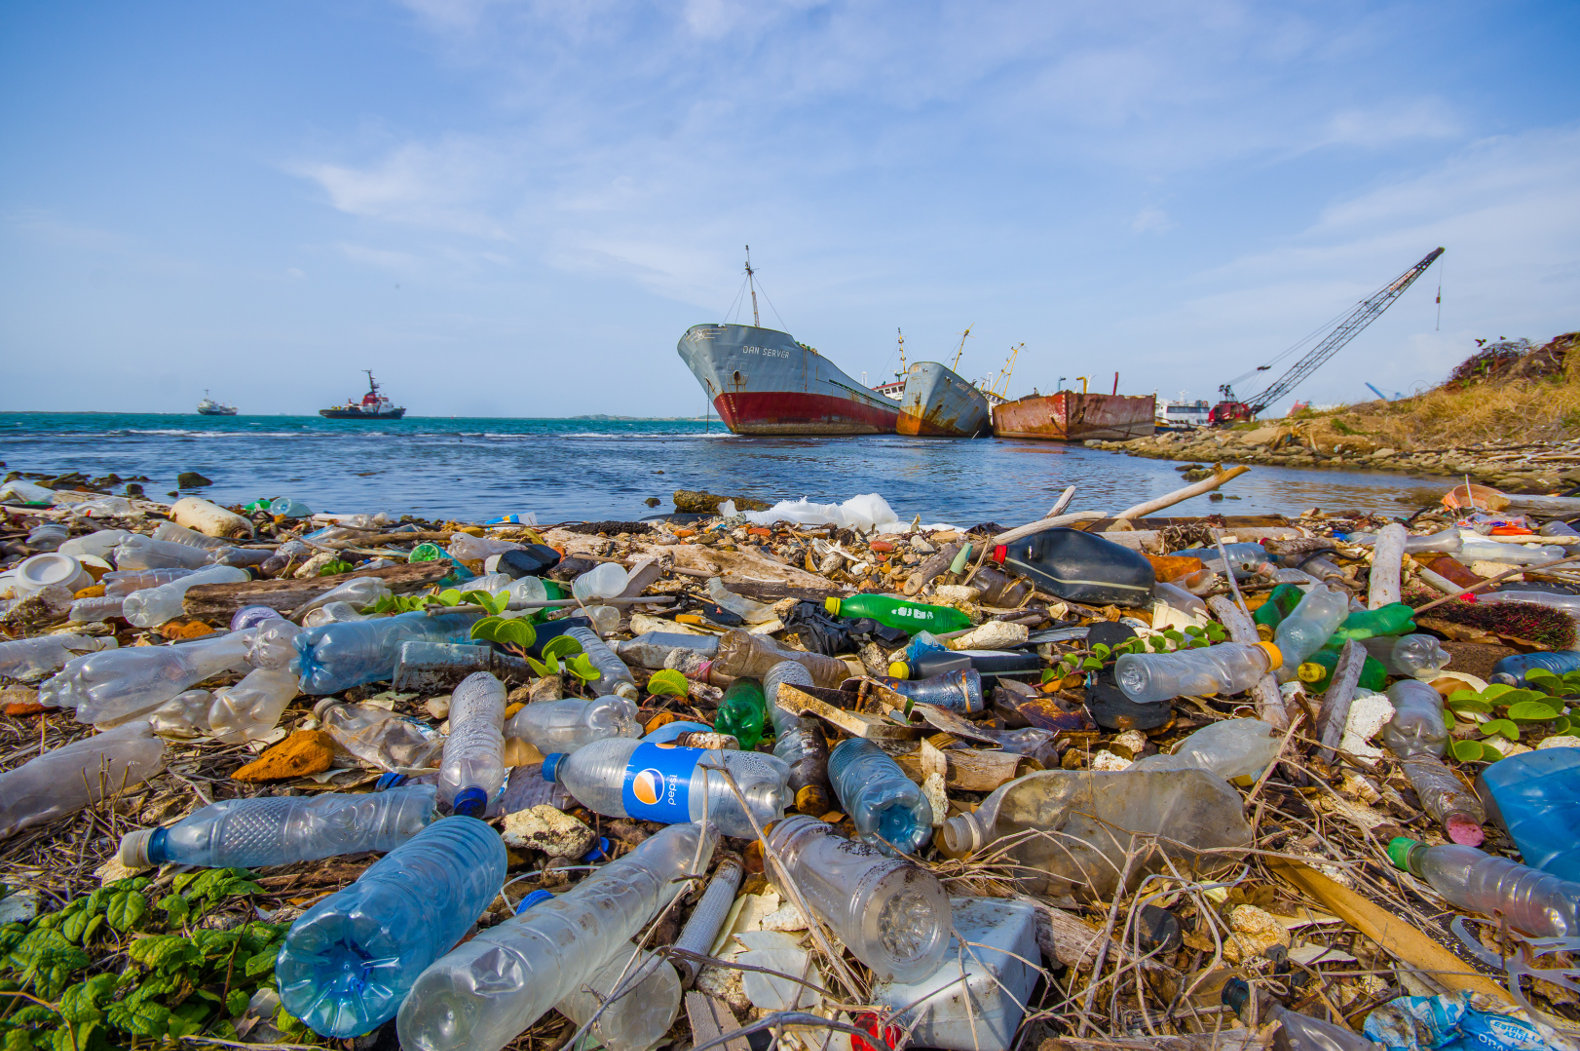 More information about "Η Μεσόγειος κινδυνεύει από τα πλαστικά"